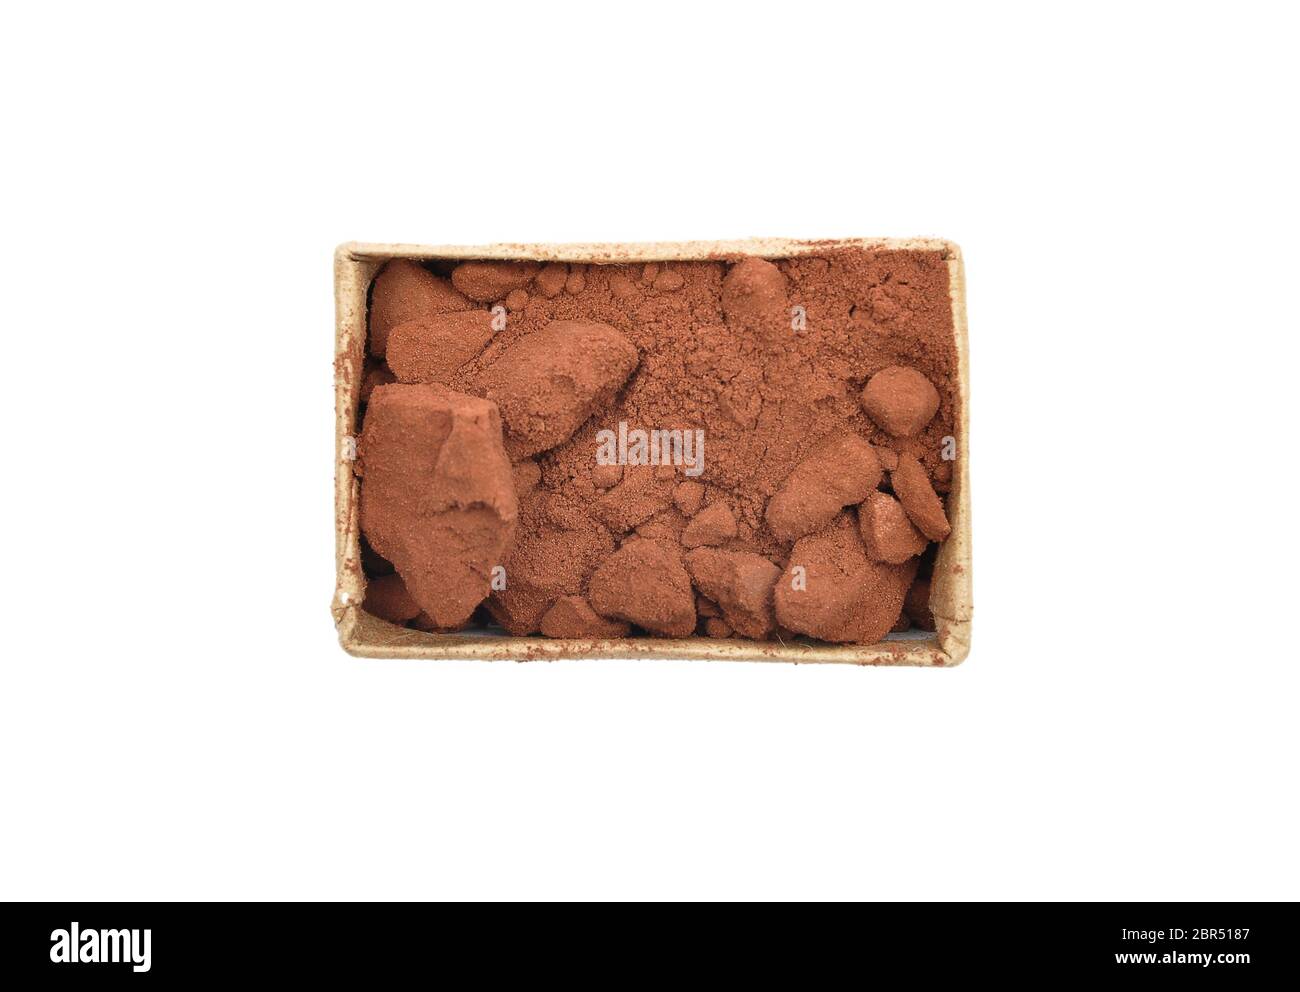 Cacao powder in carton on white background Stock Photo